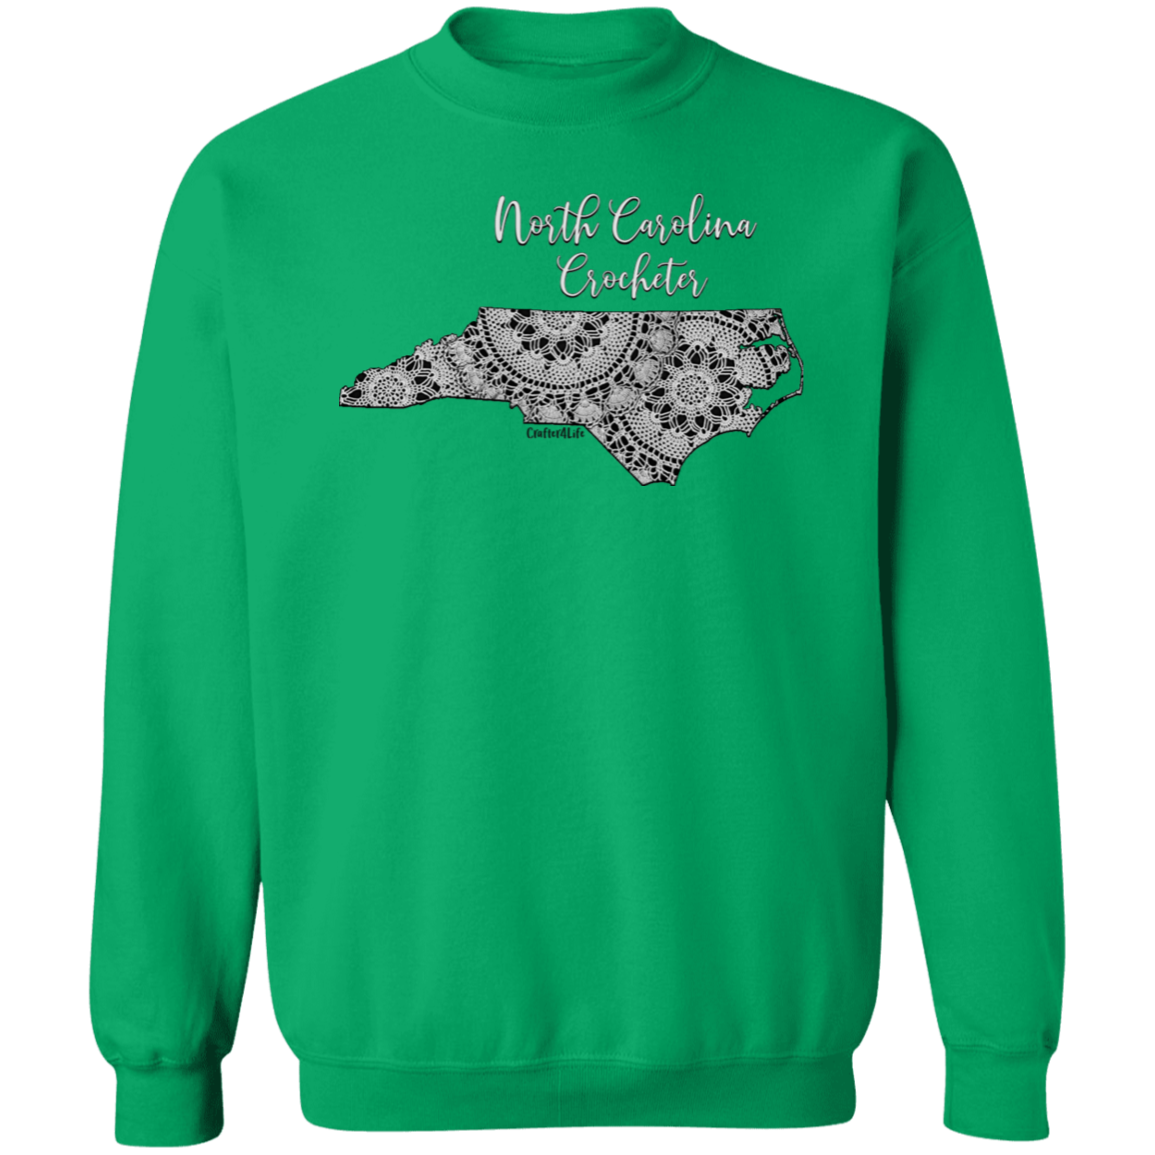 North Carolina Crocheter Crewneck Pullover Sweatshirt